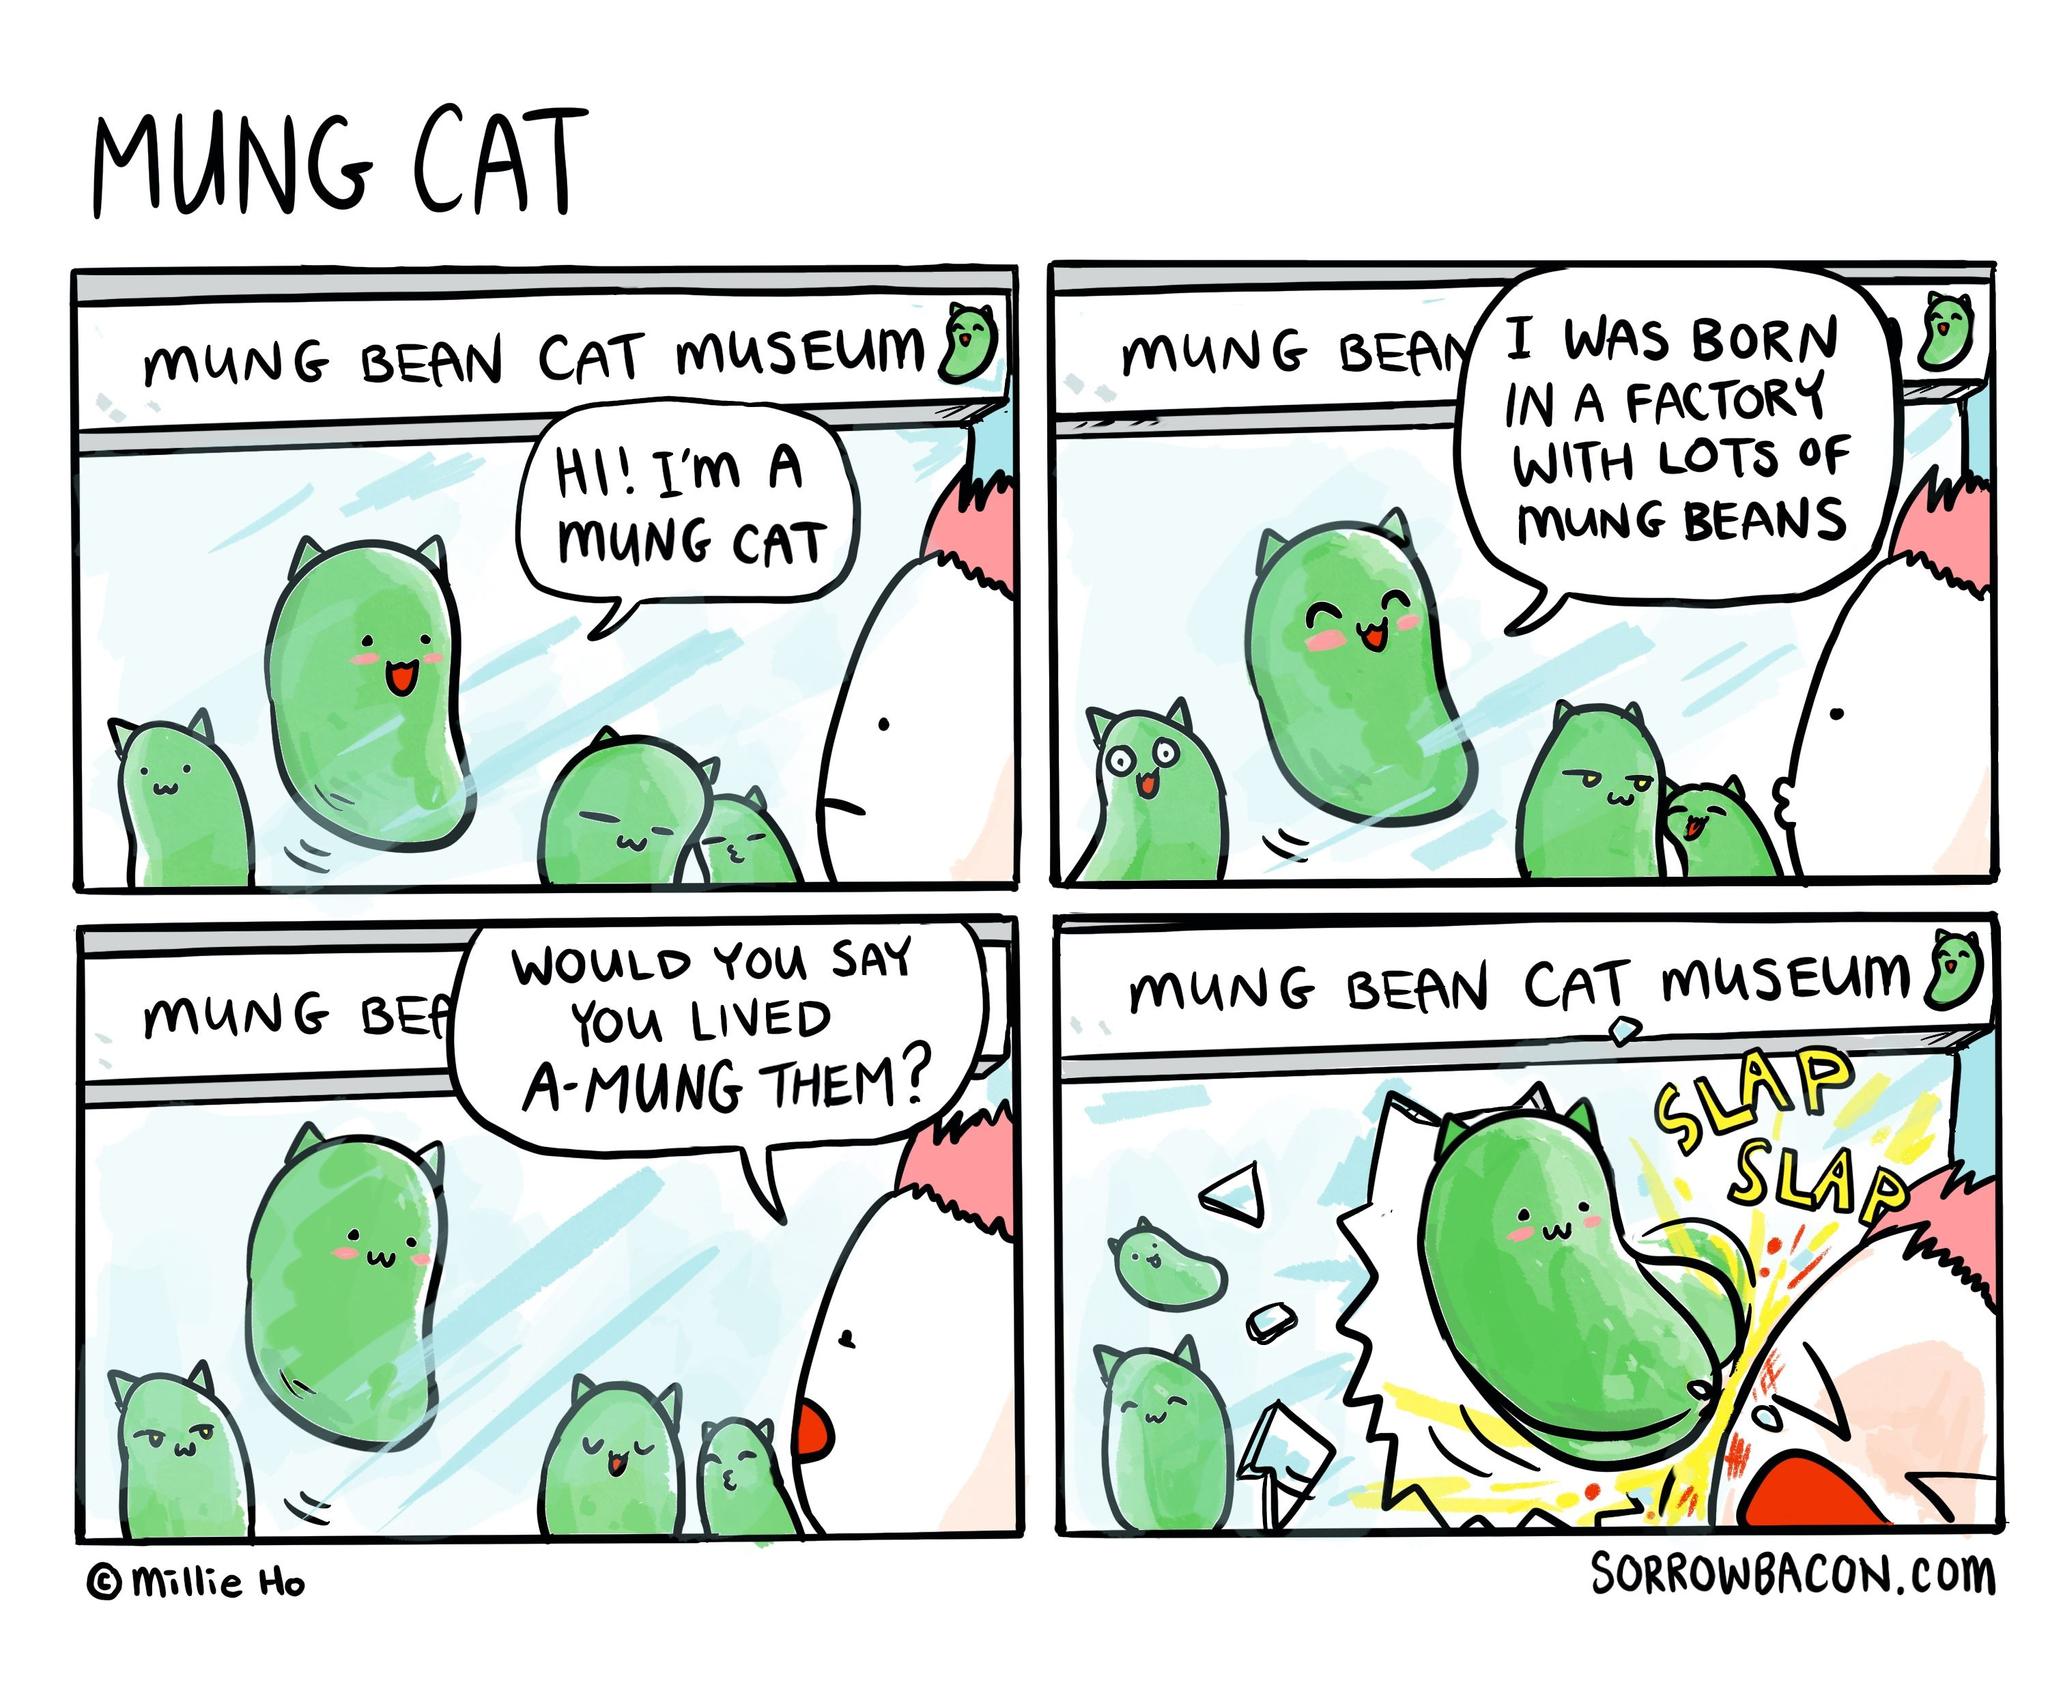 Mung Cat sorrowbacon comic